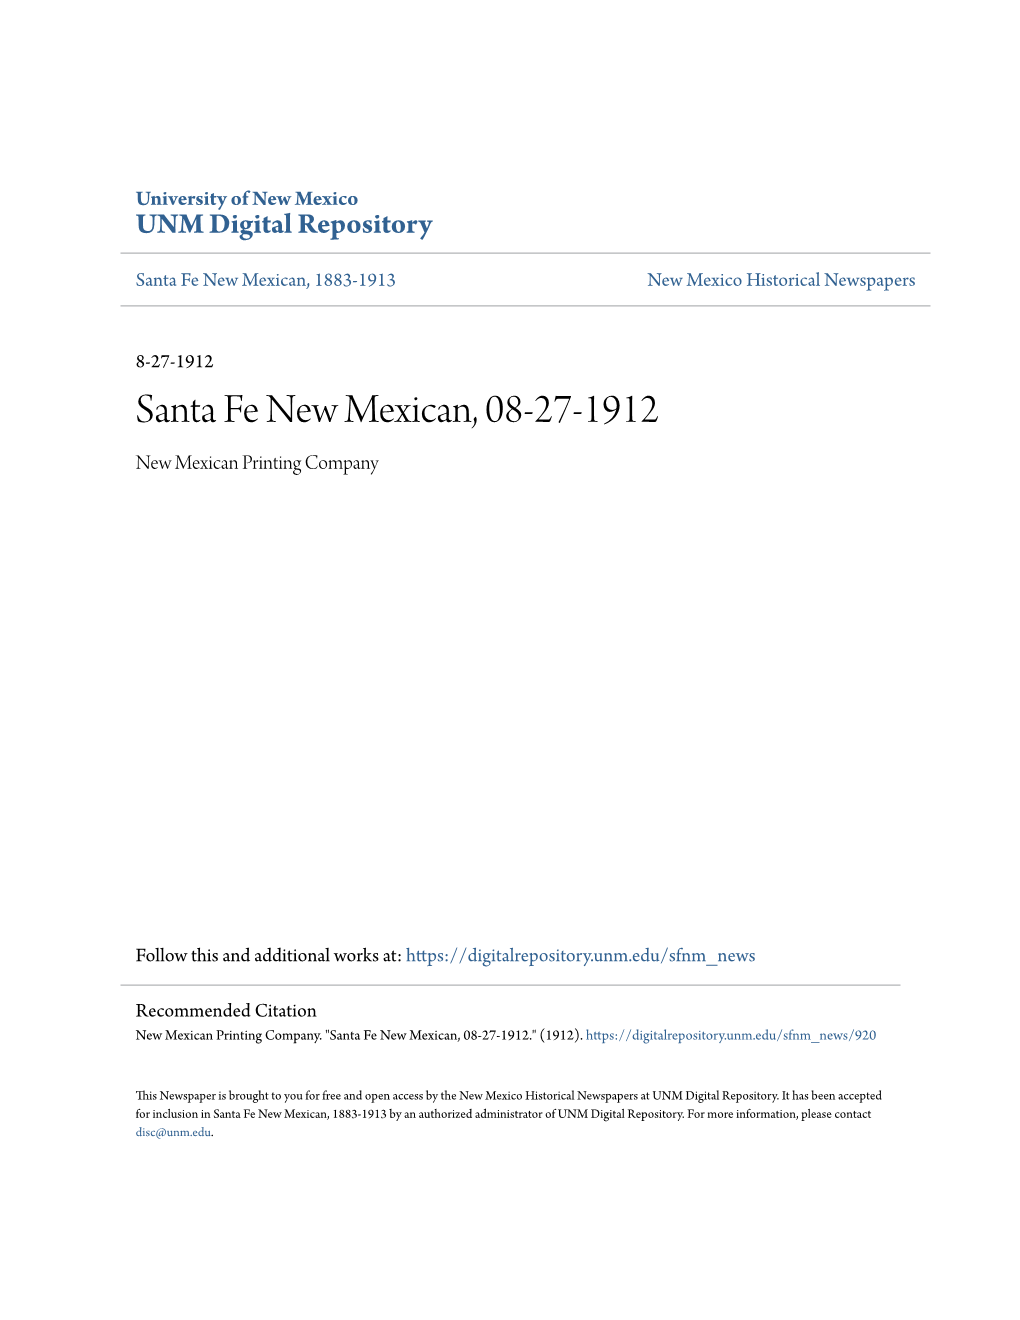 Santa Fe New Mexican, 08-27-1912 New Mexican Printing Company